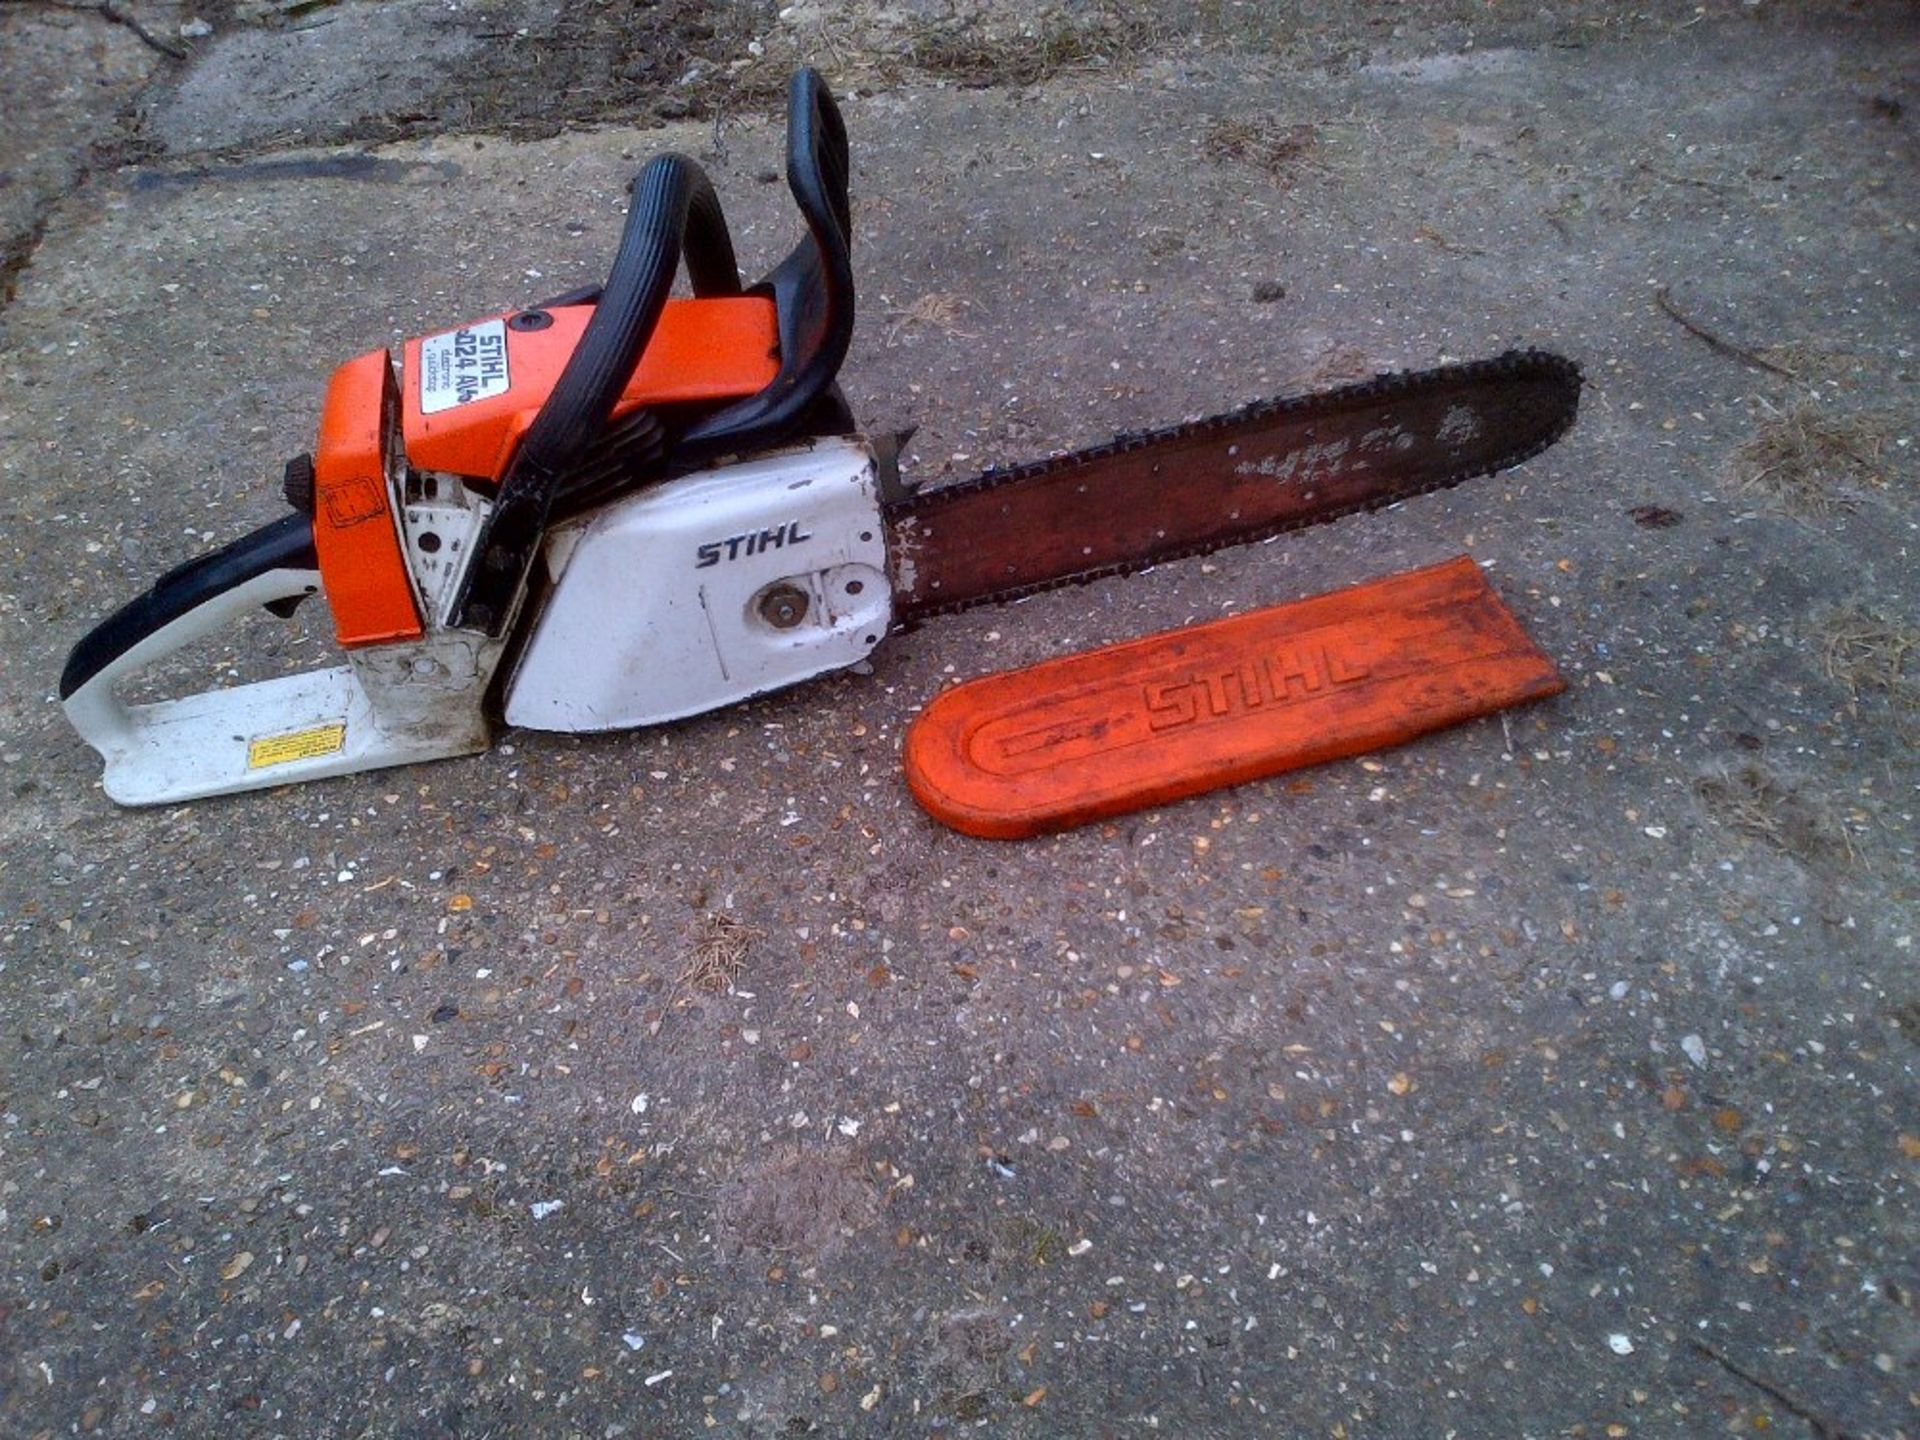 Stihl 024 chainsaw. Stored near Langley, Norwich.